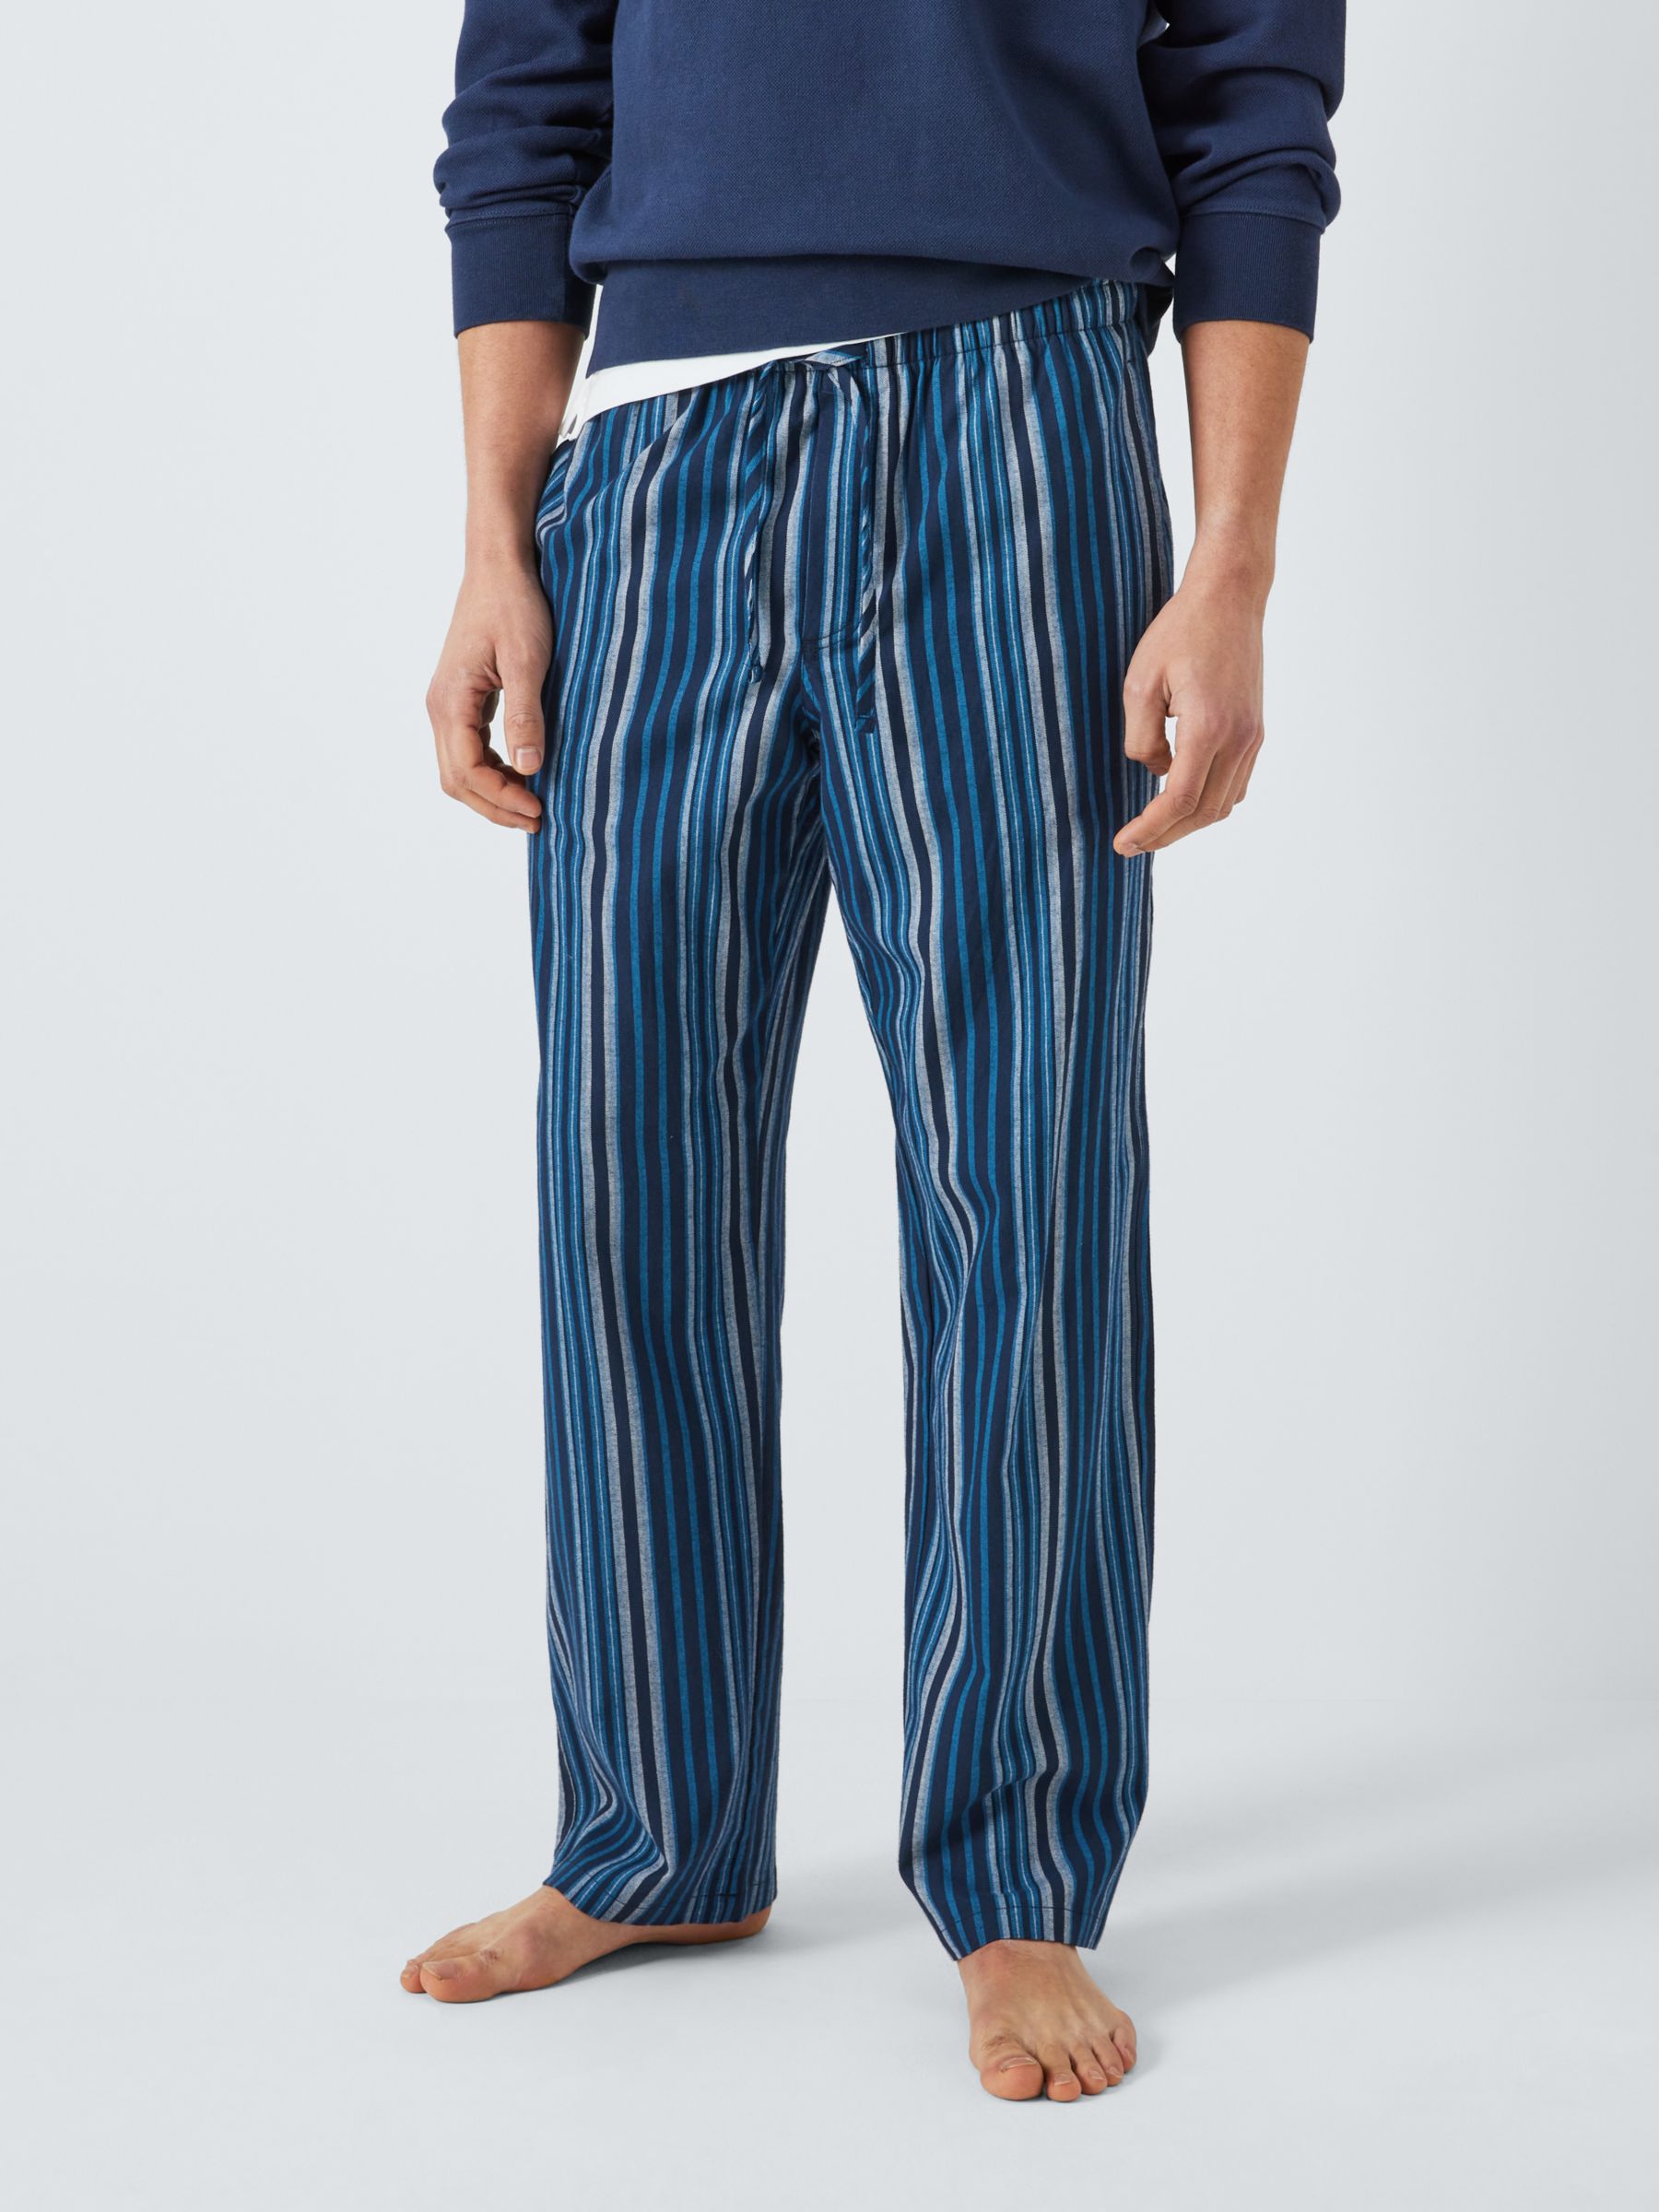 Men's Pajama Bottoms, Sleepwear Sale